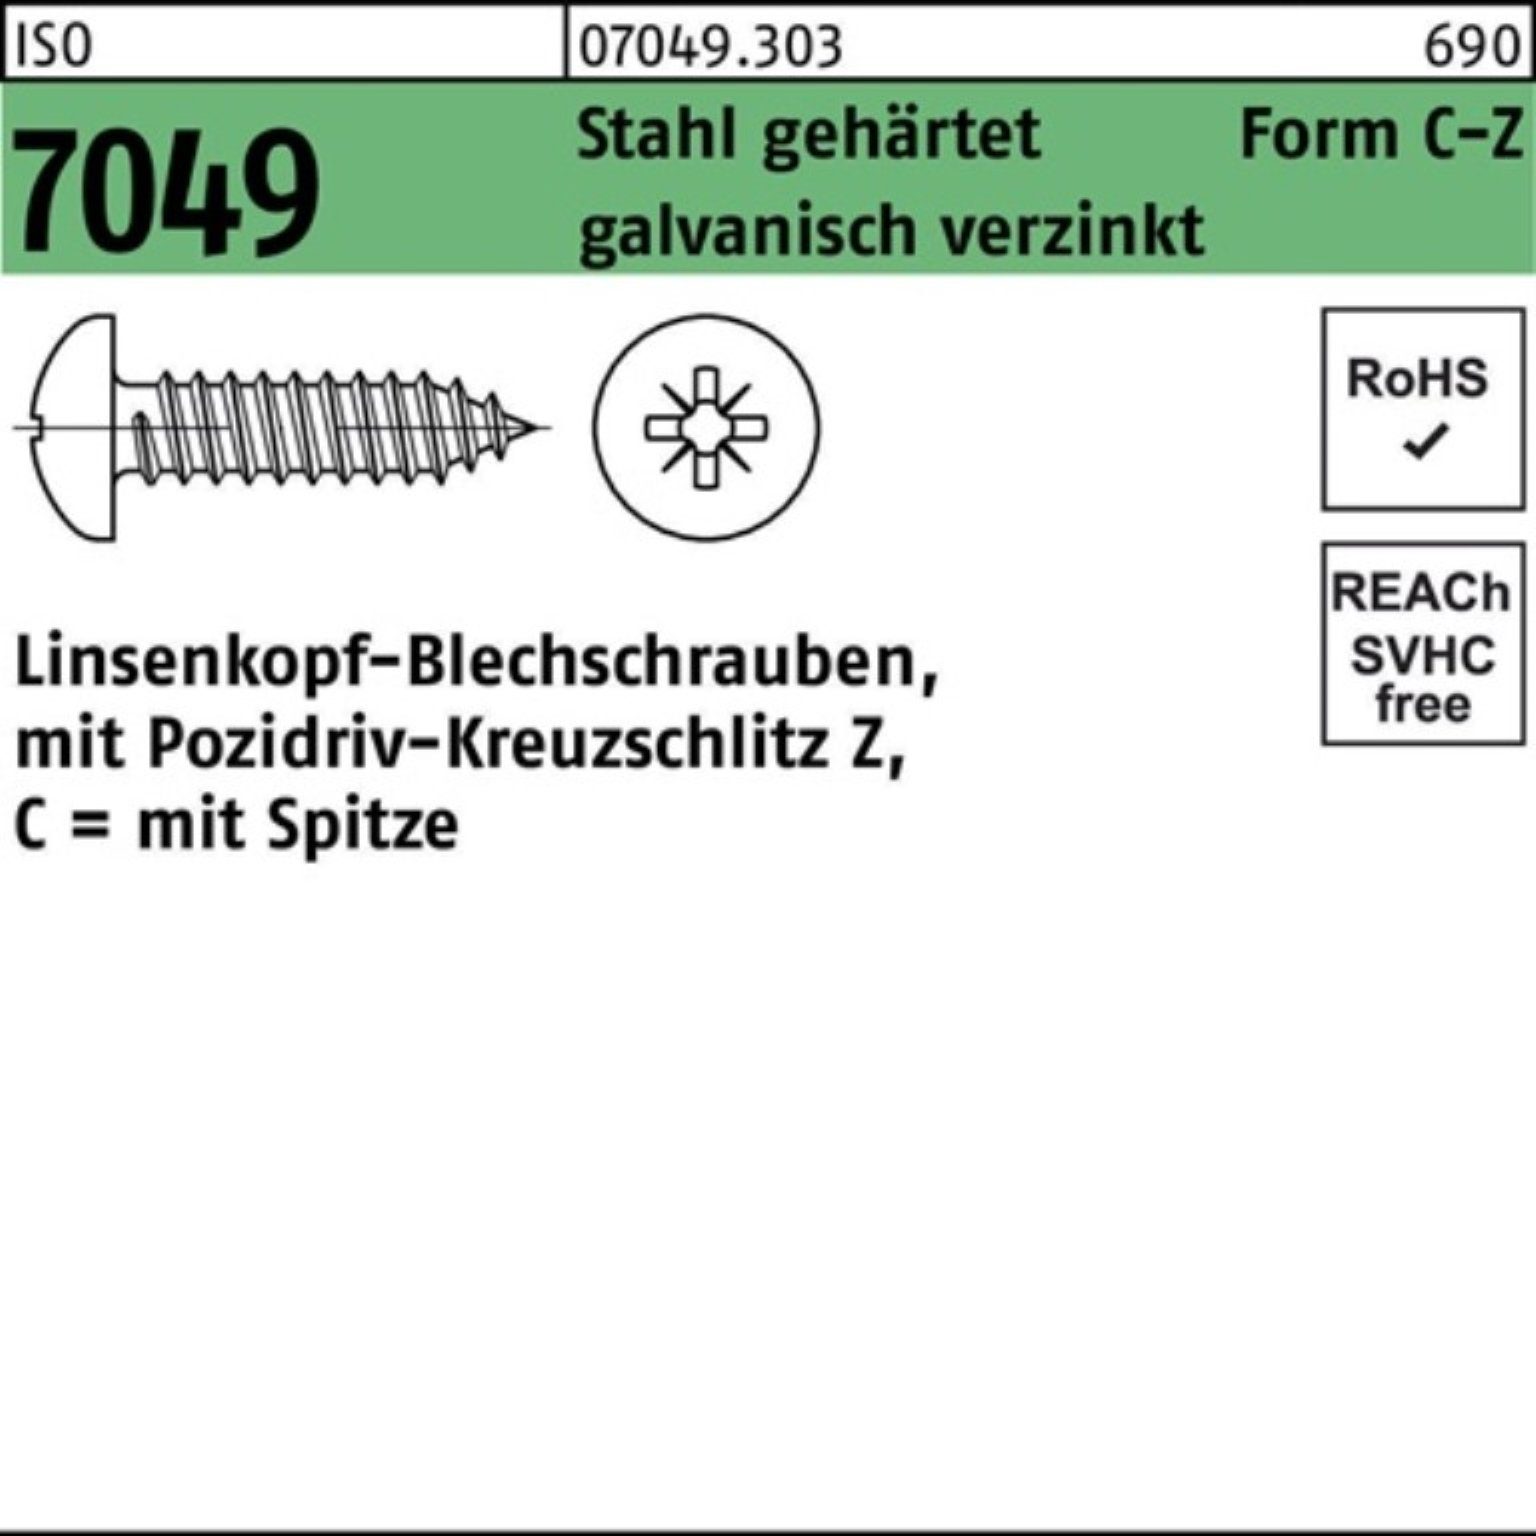 Reyher Blechschraube 100er Pack -C-Z ge 7049 32 LIKO ISO 3,9x Blechschraube Spitze/PZ Stahl